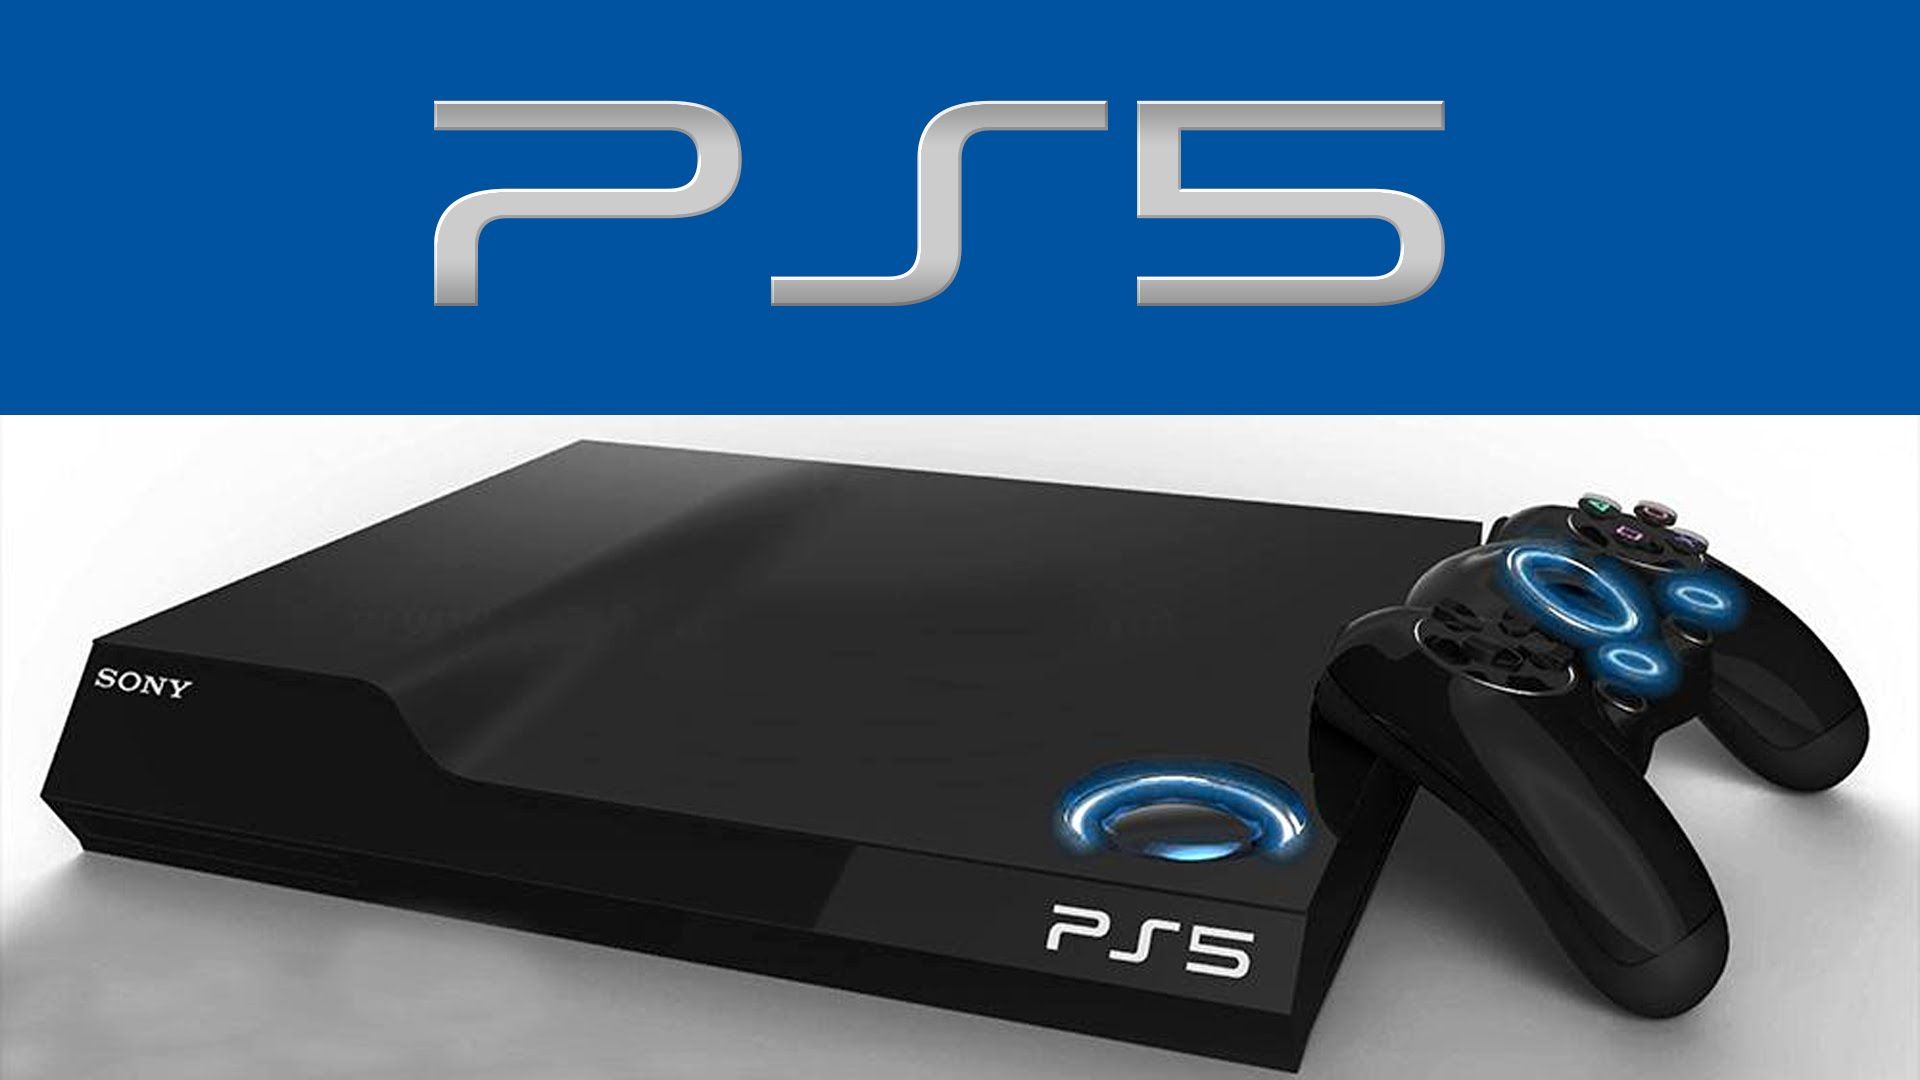 betale edderkop fantastisk PlayStation 5: слухи и факты | Компьютерра